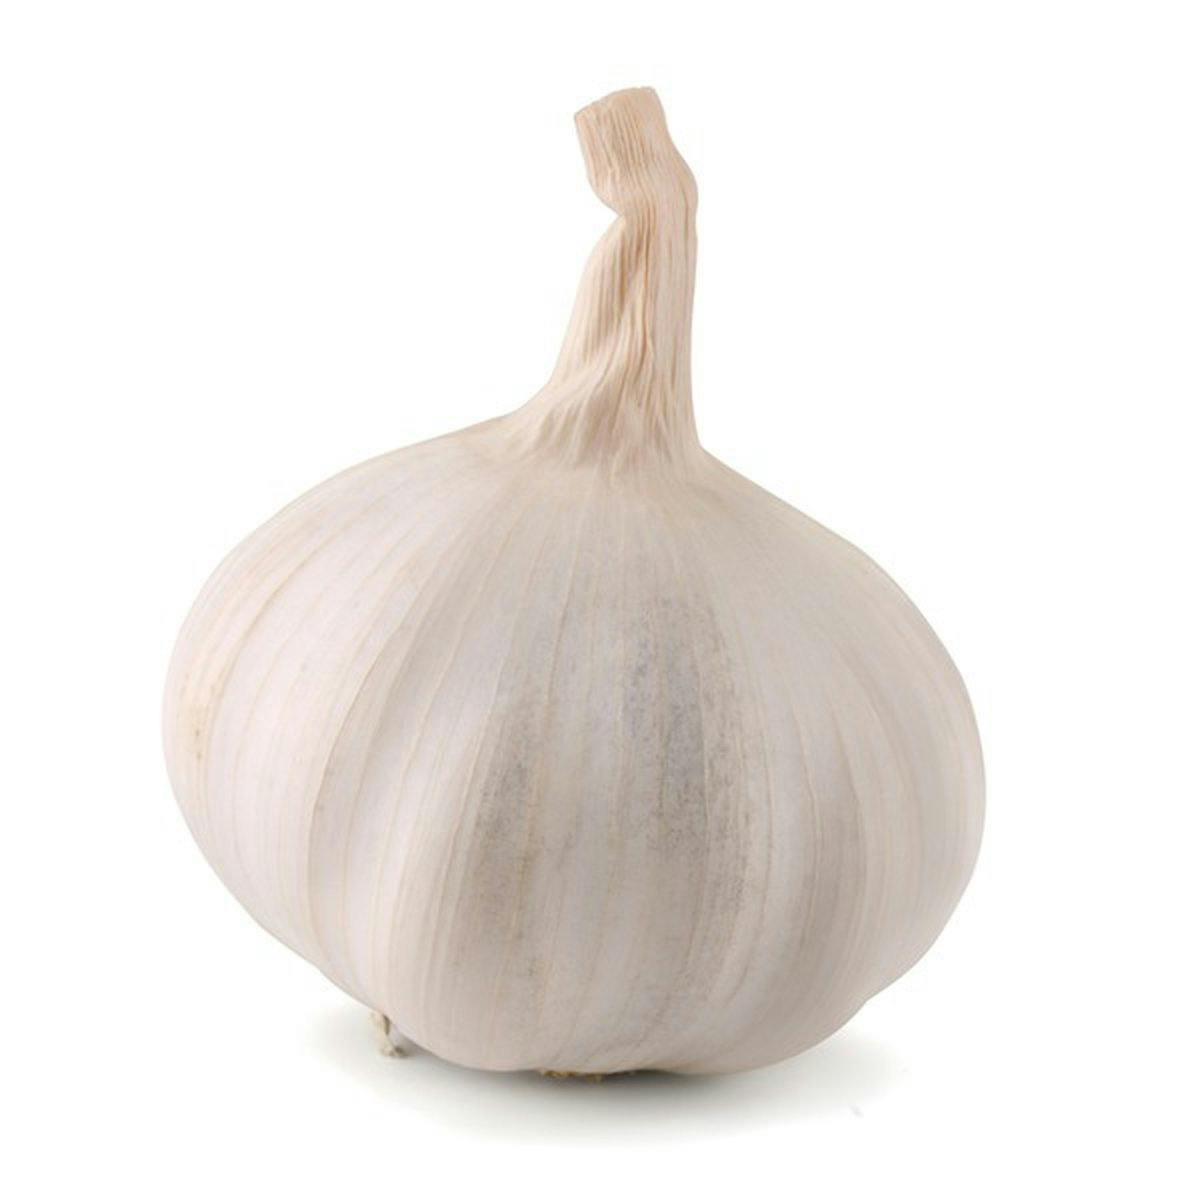 of garlic, chopped